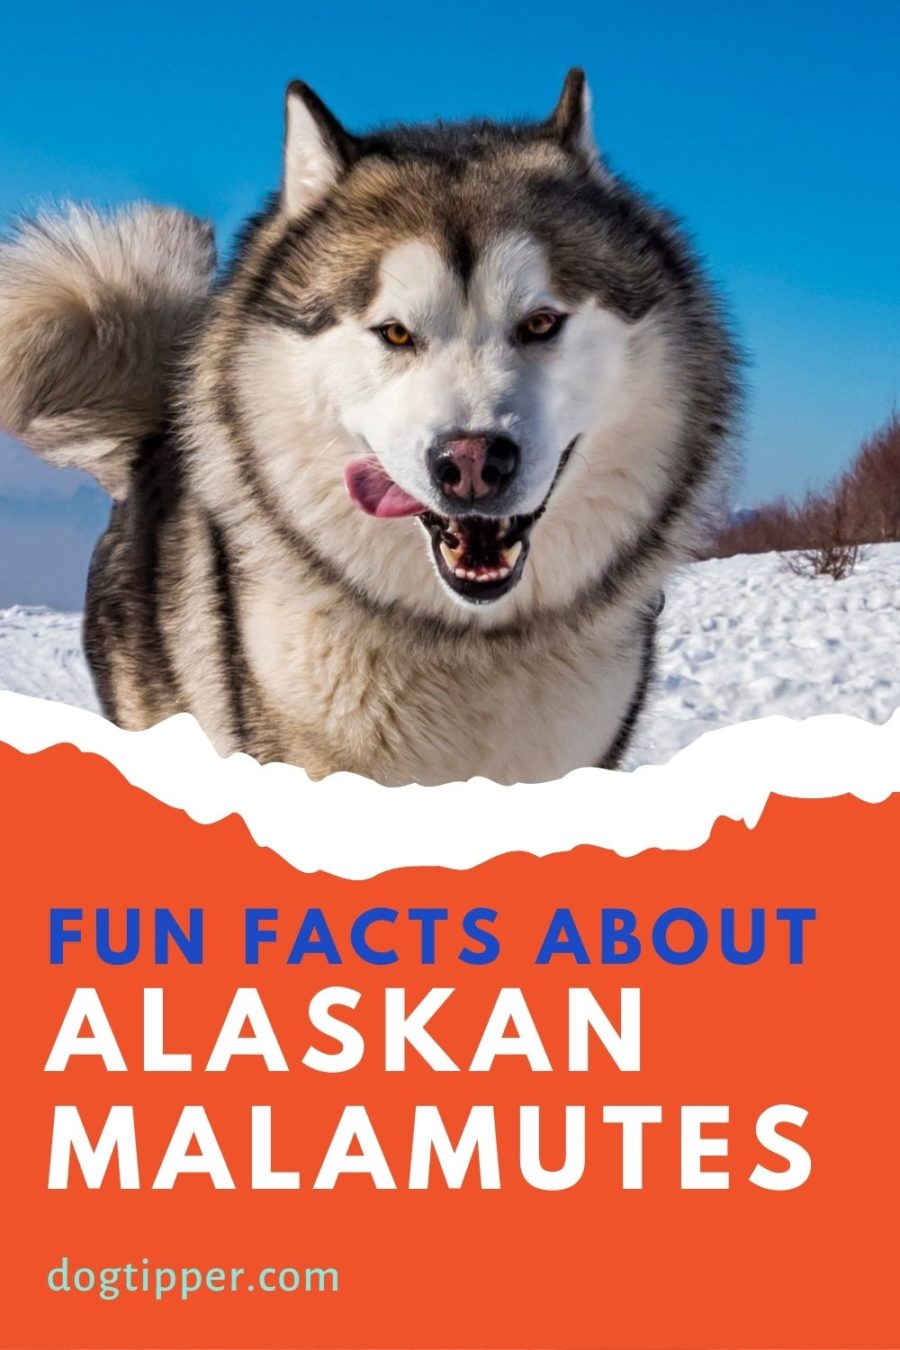 Fun Facts About Alaskan Malamutes